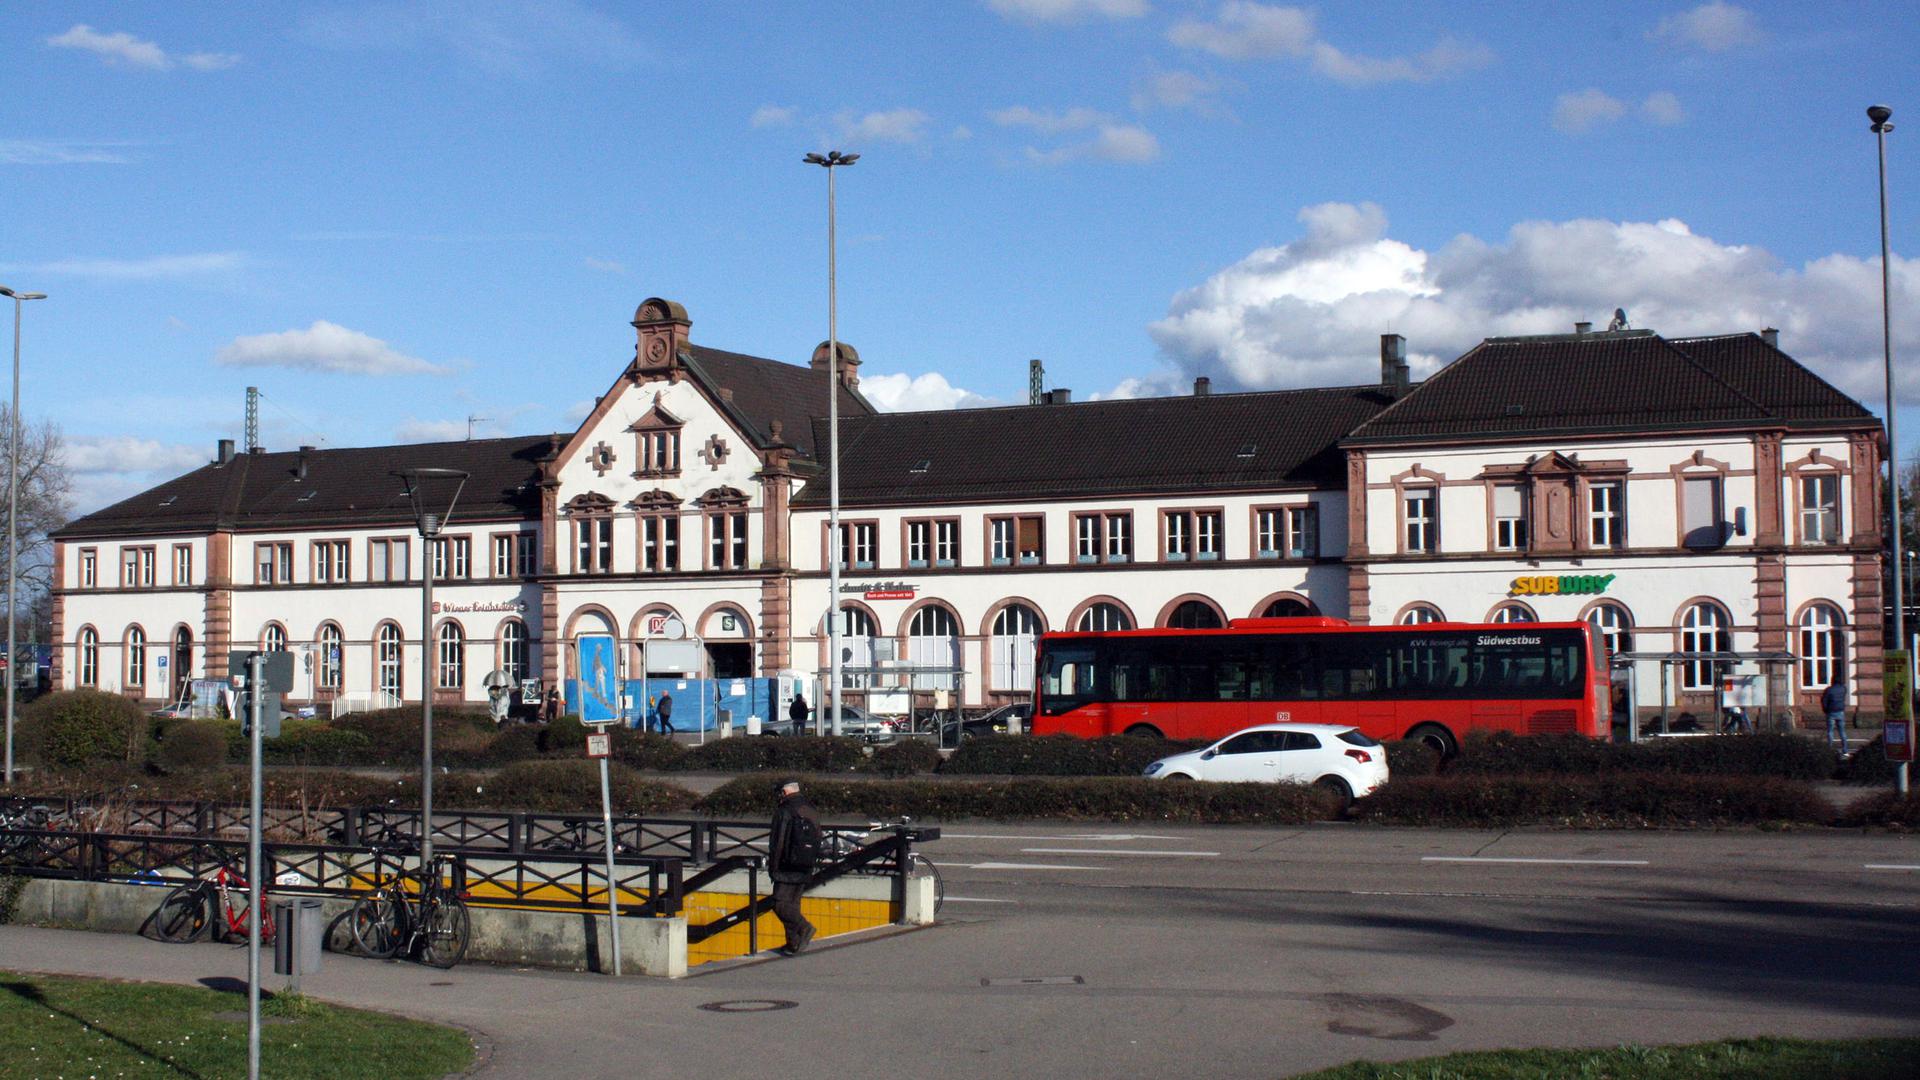 Bahnhof Rastatt
Bahnhof Rastatt vom Kulturplatz aus gesehen